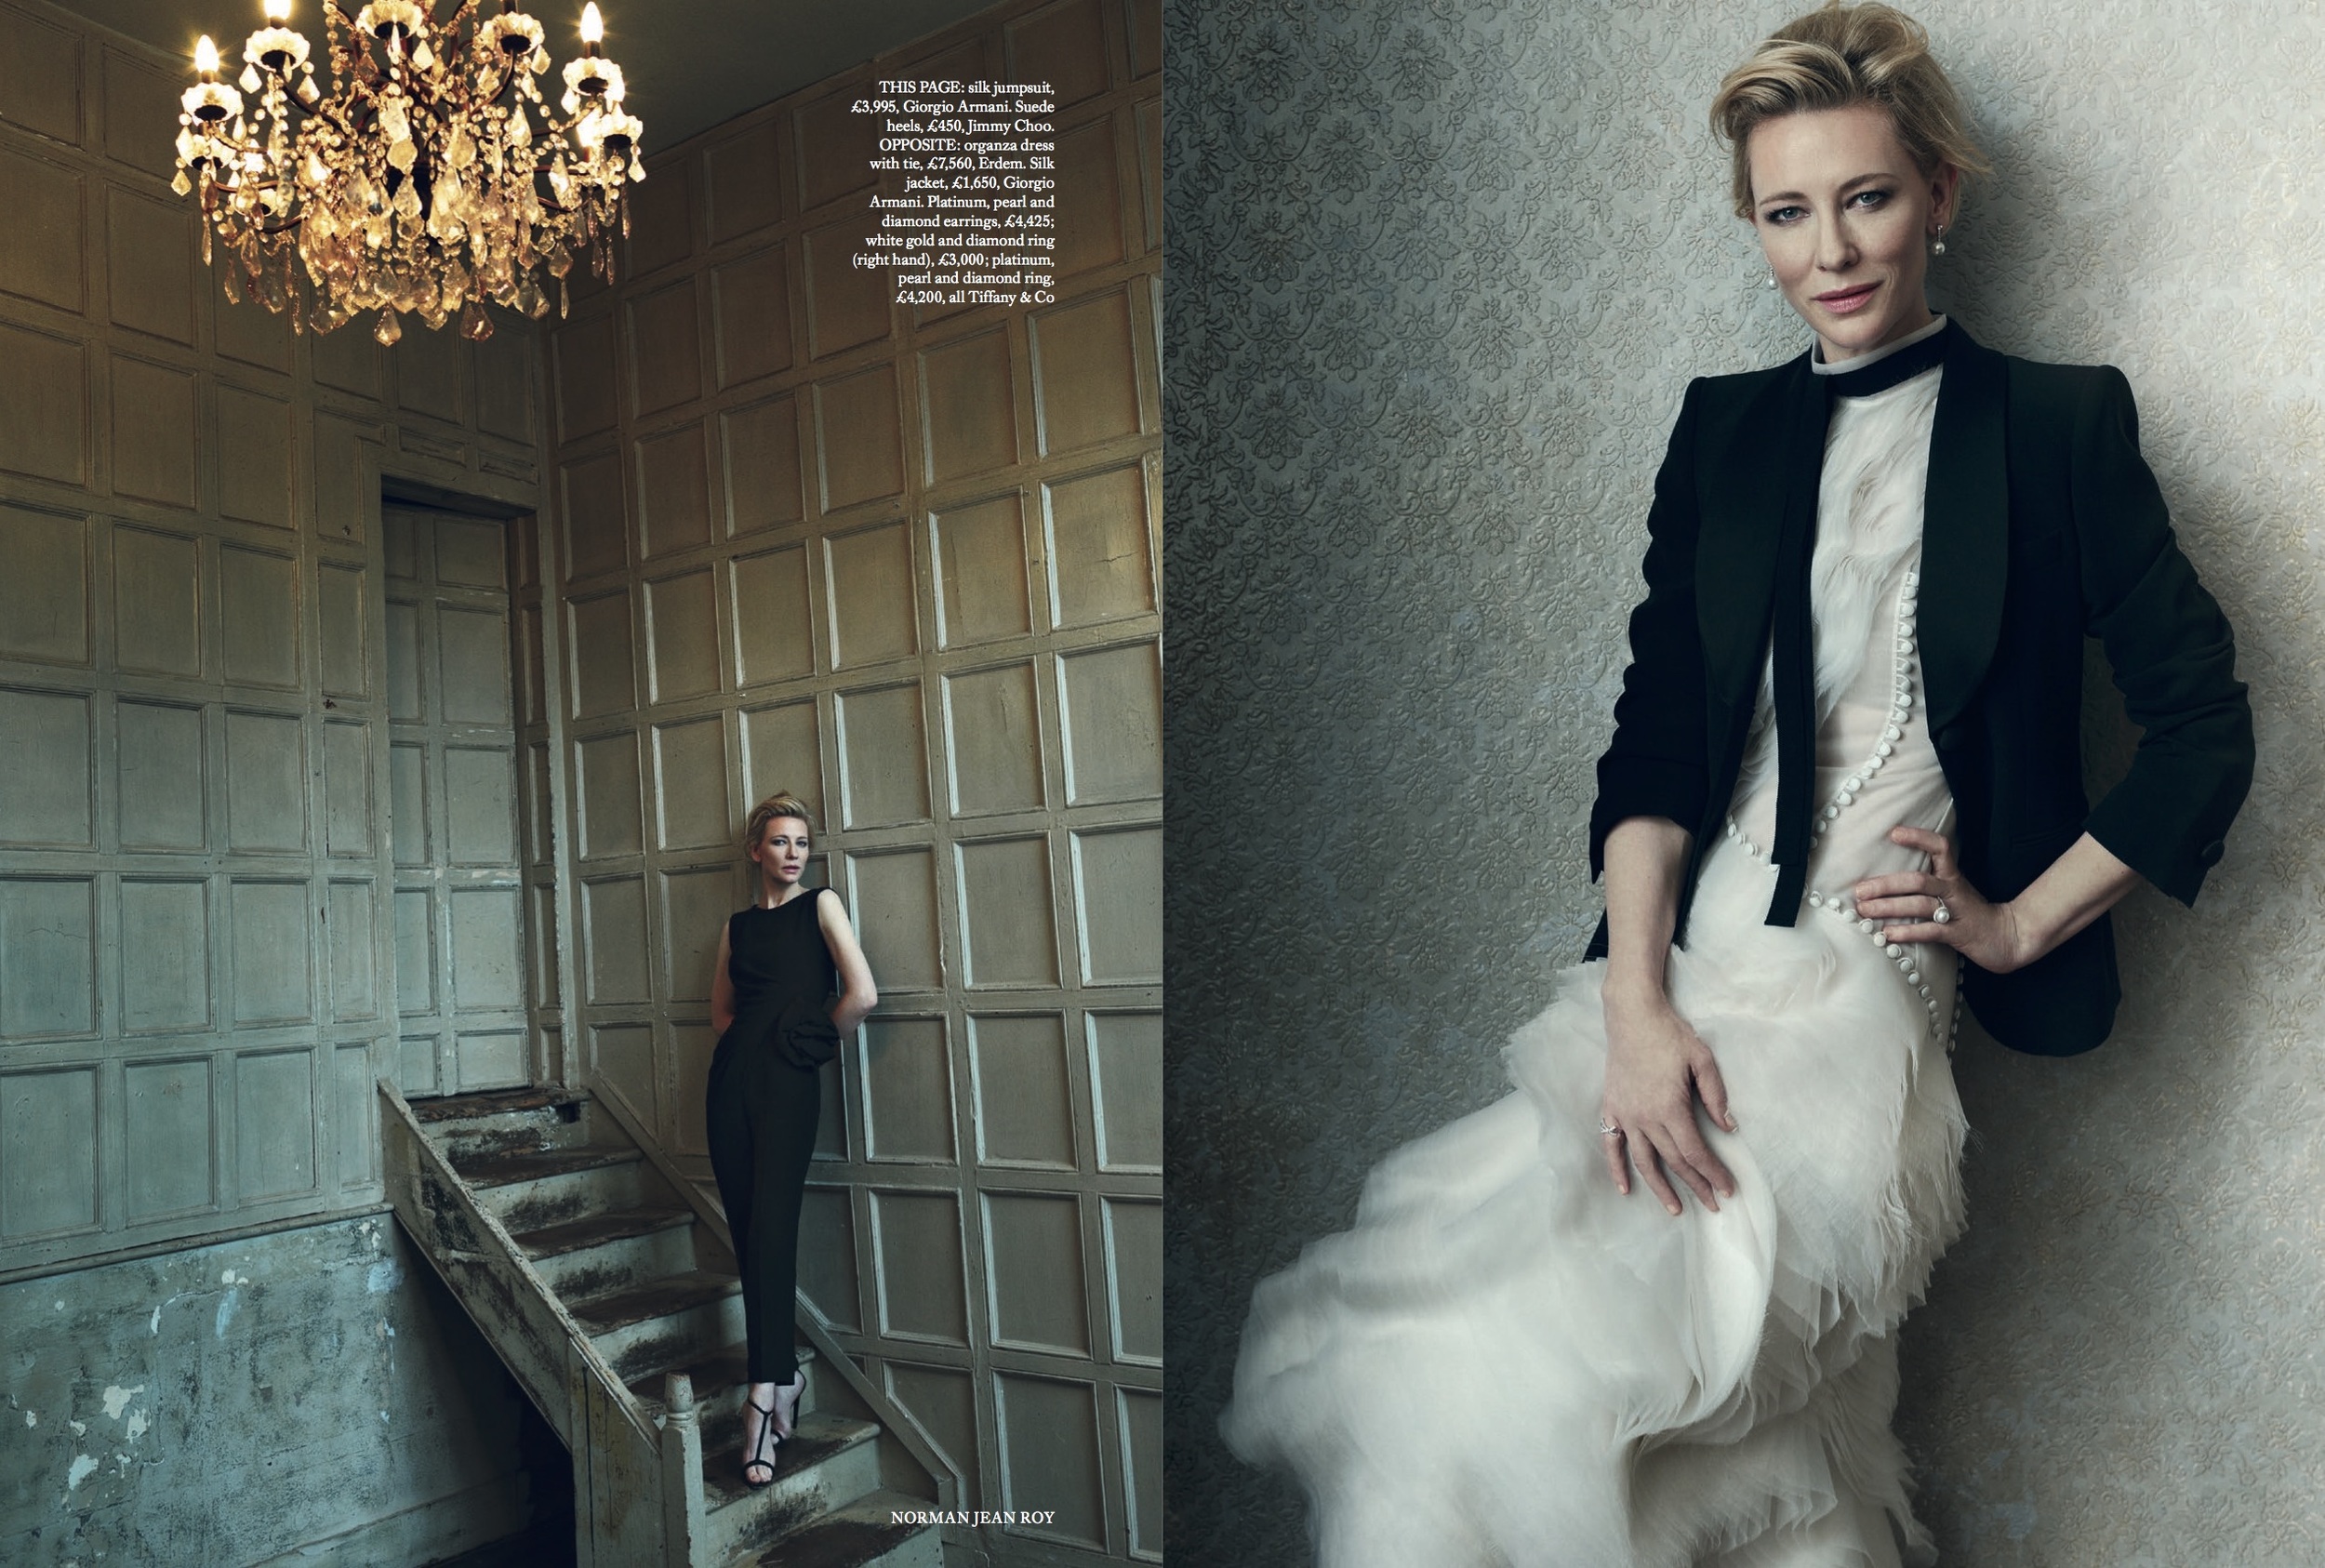 Cate Blanchett Cover Story for Harper's Bazaar, styled by Charlie Harrington. Spread 3.